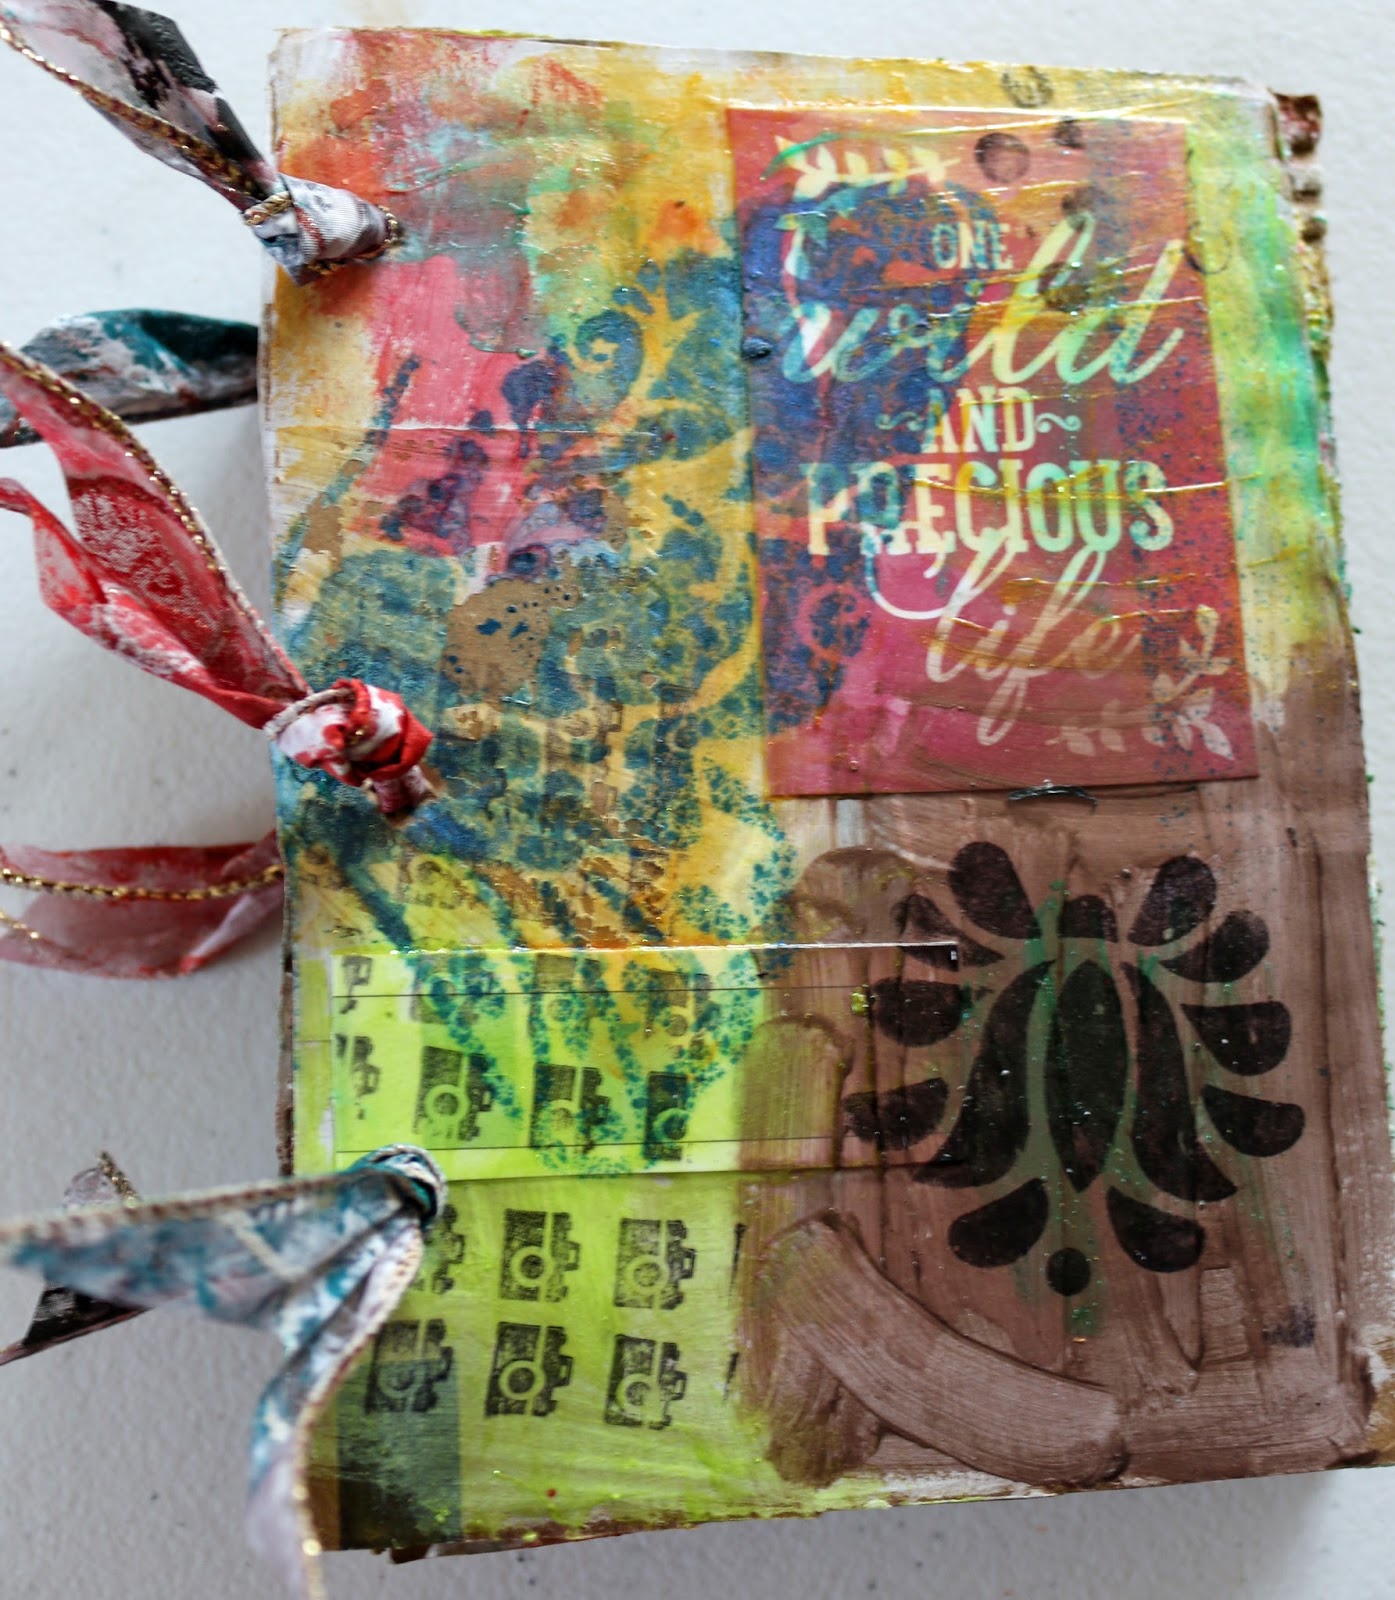 Using Washi Tape in My Art Journal - Carolyn Dube